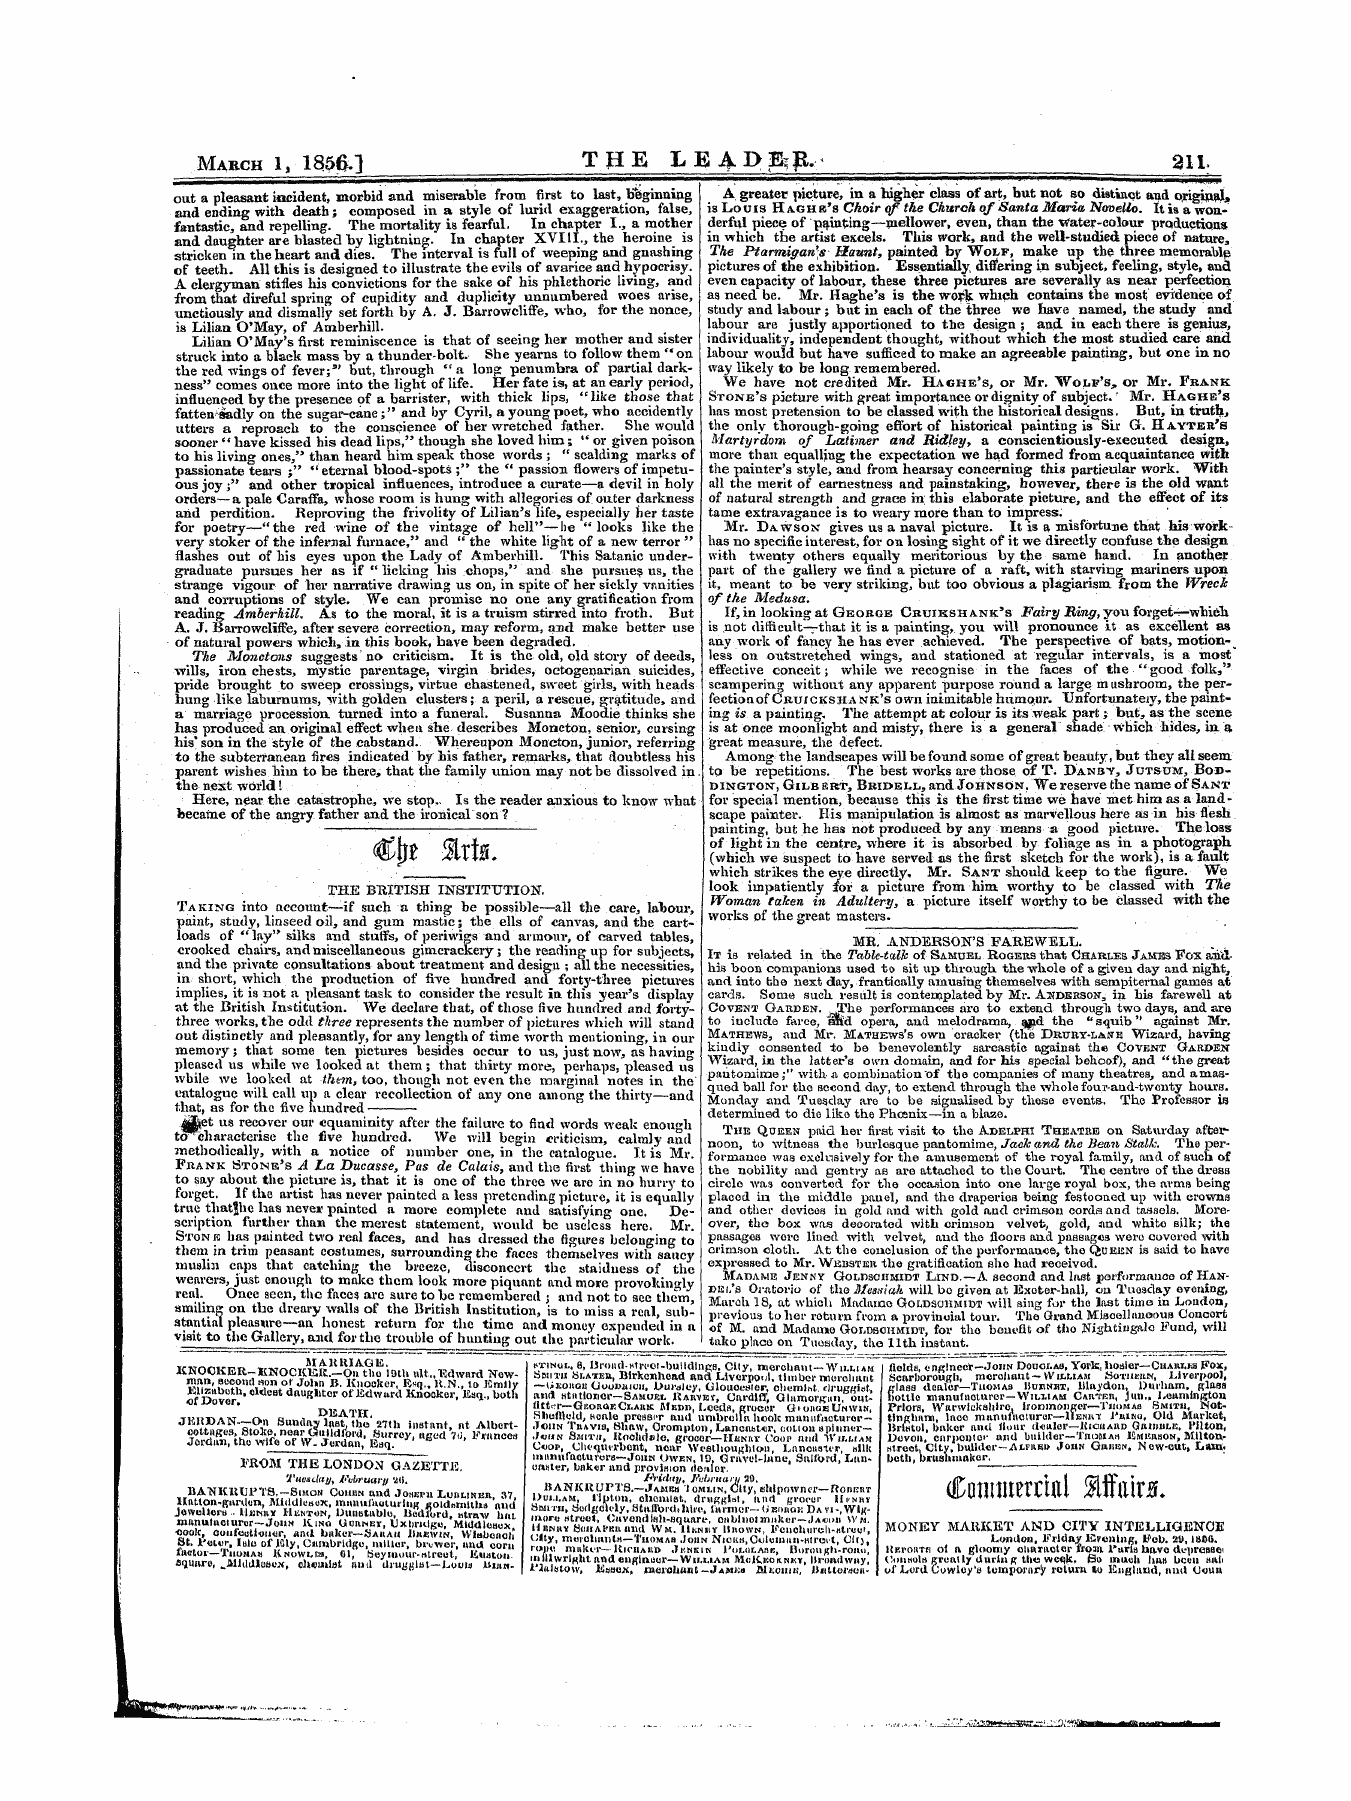 Leader (1850-1860): jS F Y, 1st edition - Rtftfittv Qj'hfjr ^Vbjjt /Viiiai